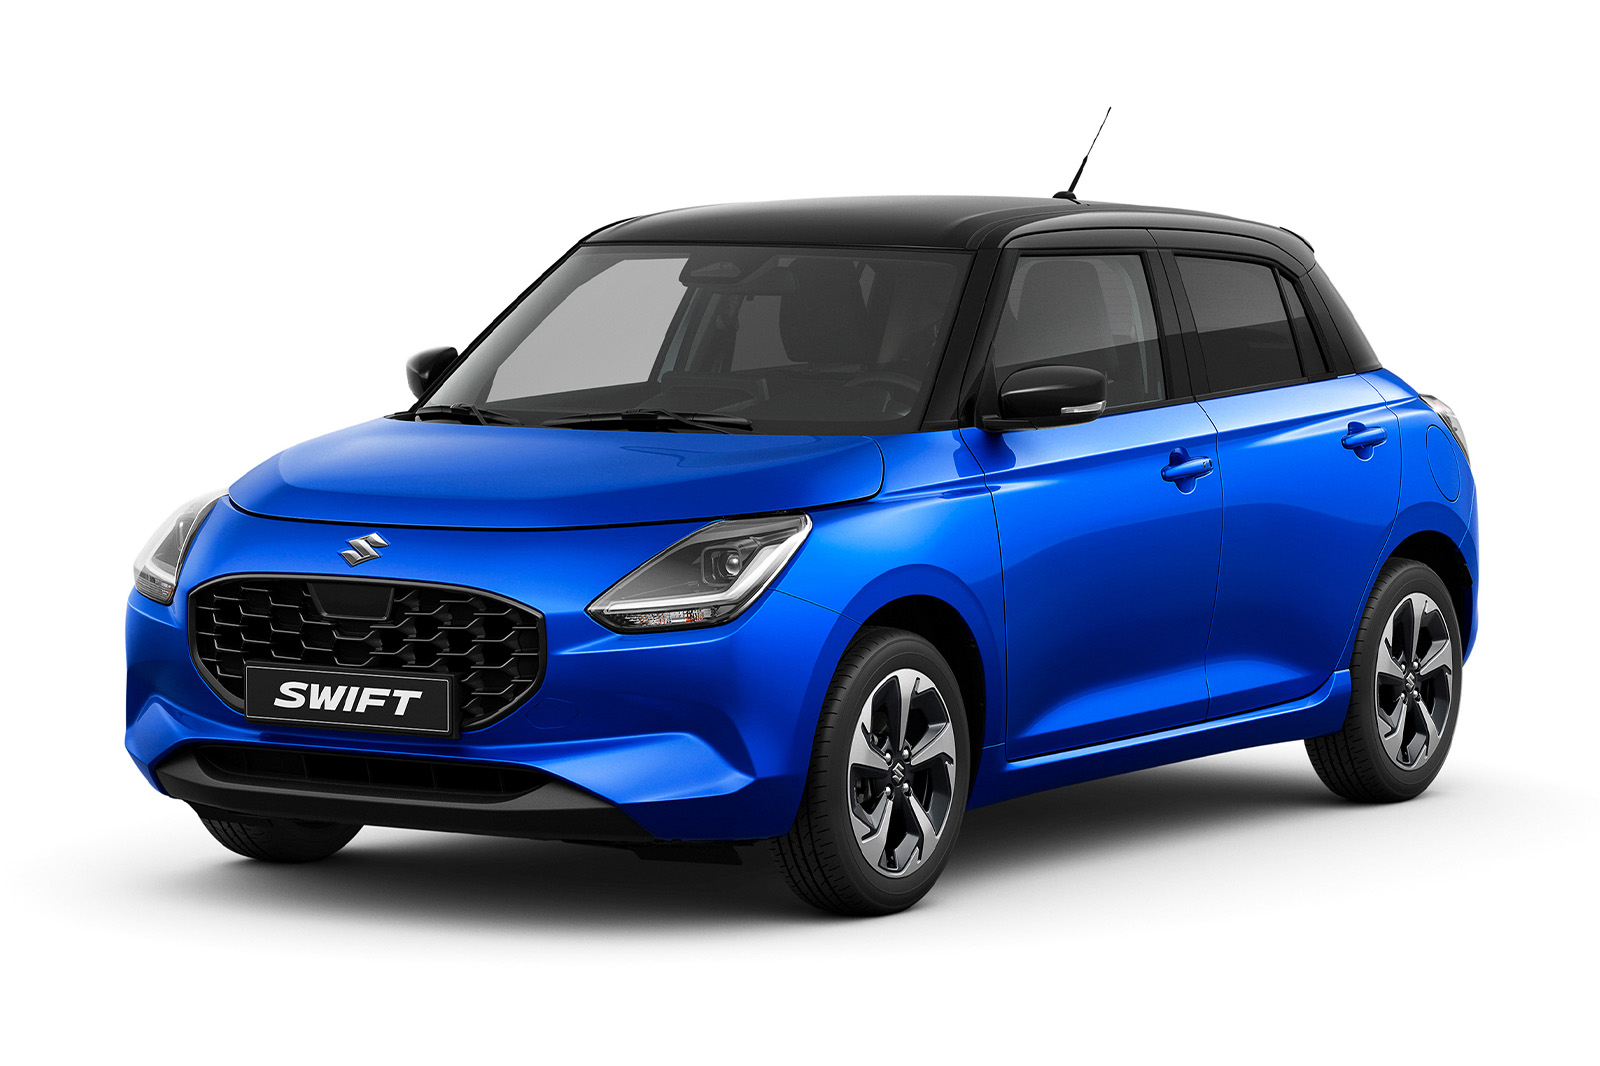 New Suzuki Swift 2020 review